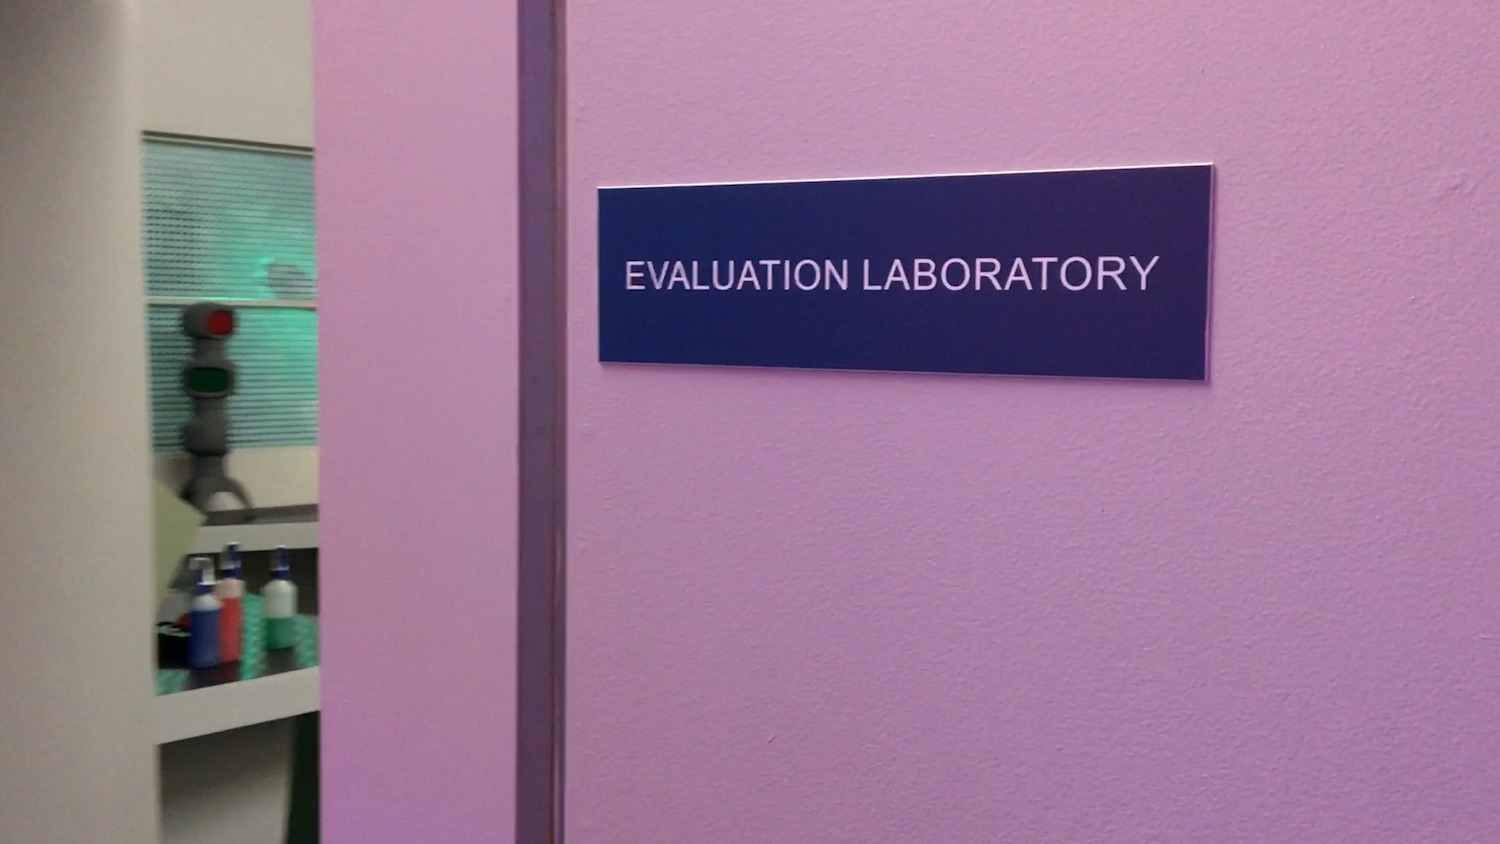  Outside Evaluation Laboratory ©2017 David R. George III 